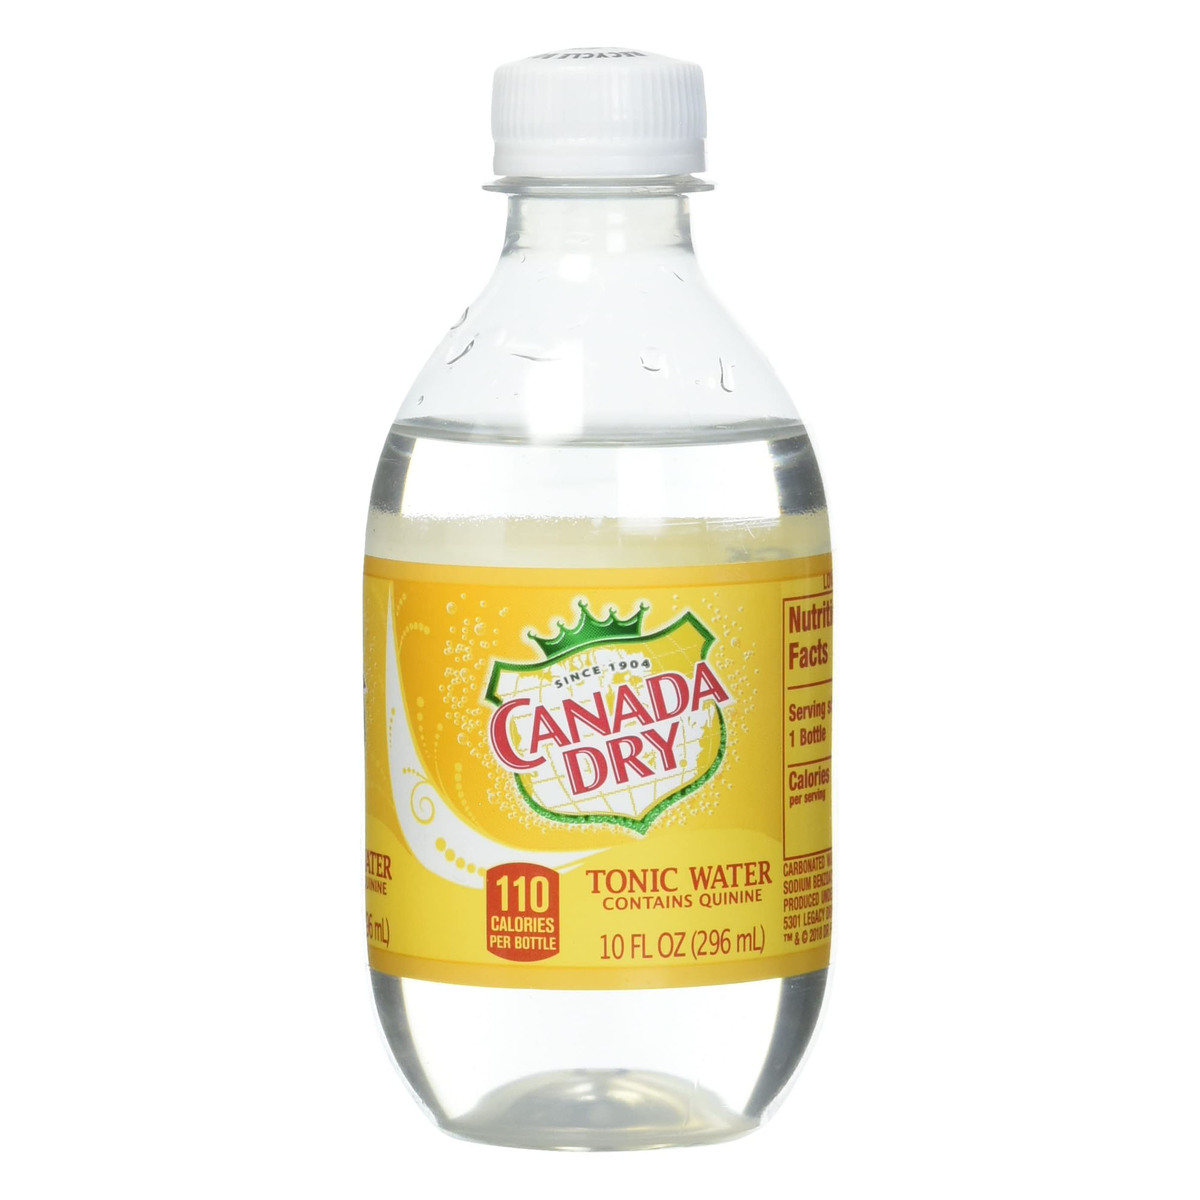 Canada Dry Tonic Water 296 ml